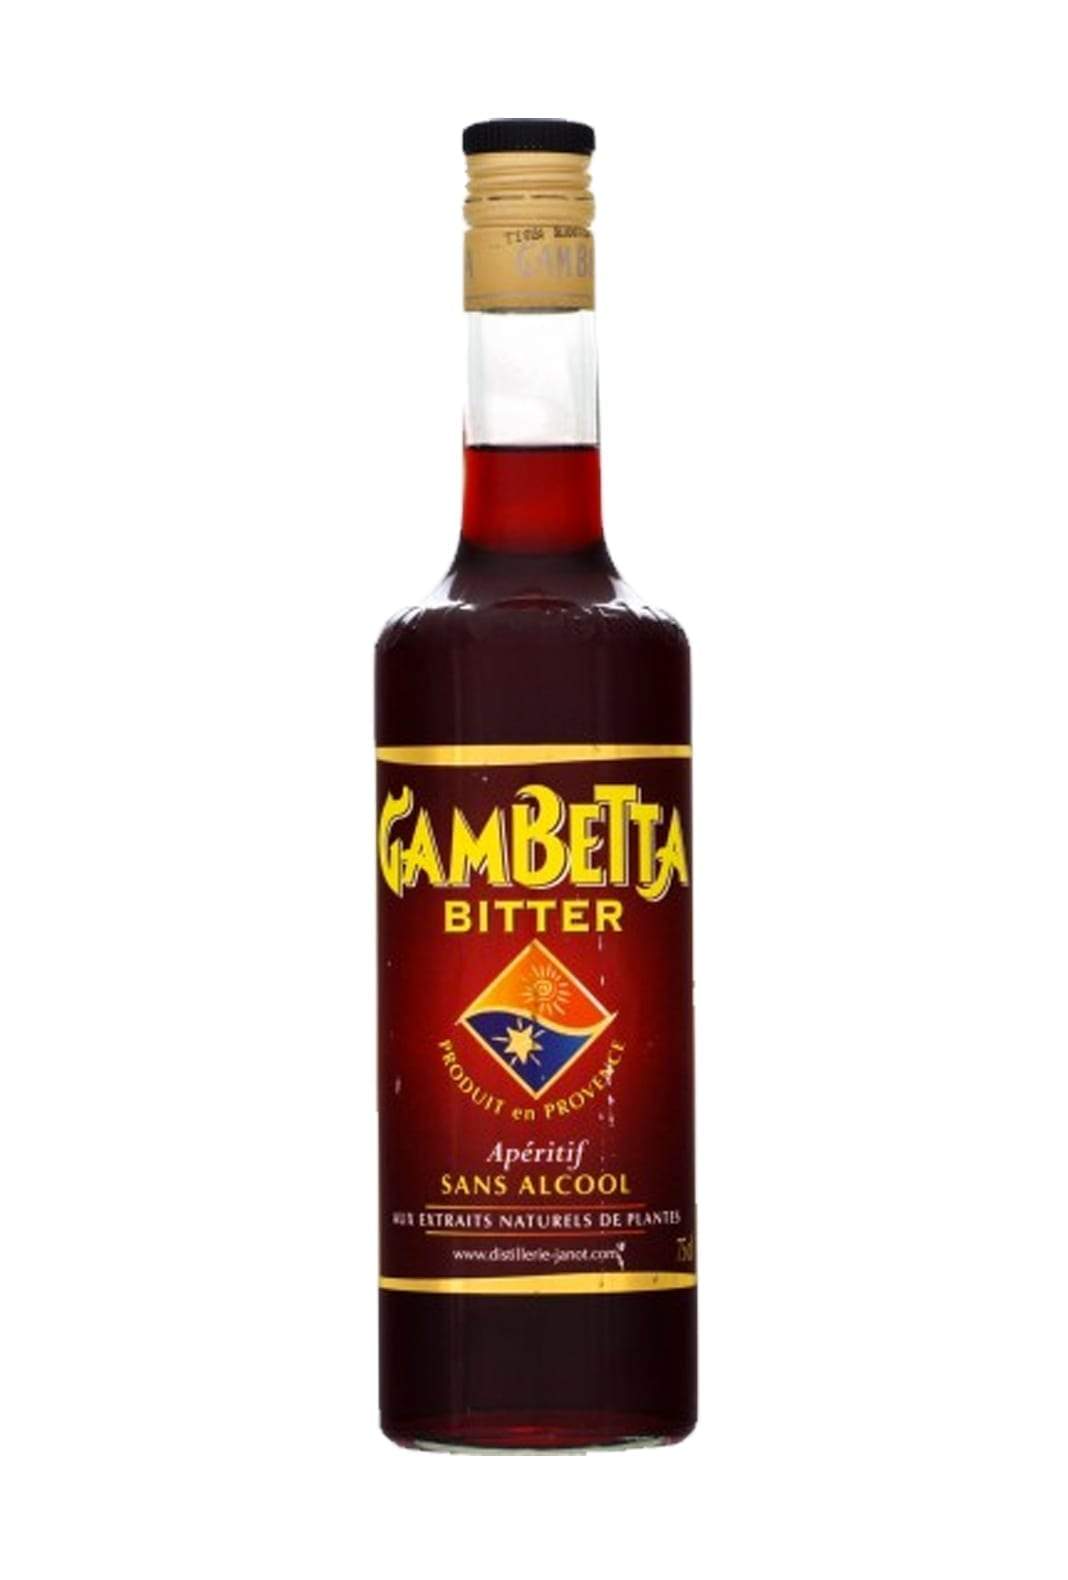 Gambetta Non-Alcoholic Bitter Aperitif 750ml | Bitters | Shop online at Spirits of France